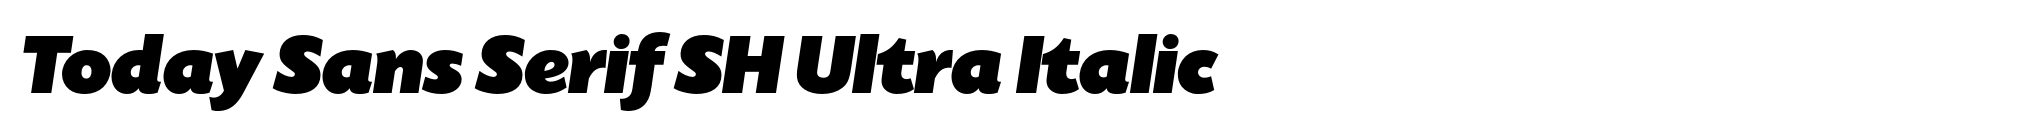 Today Sans Serif SH Ultra Italic image